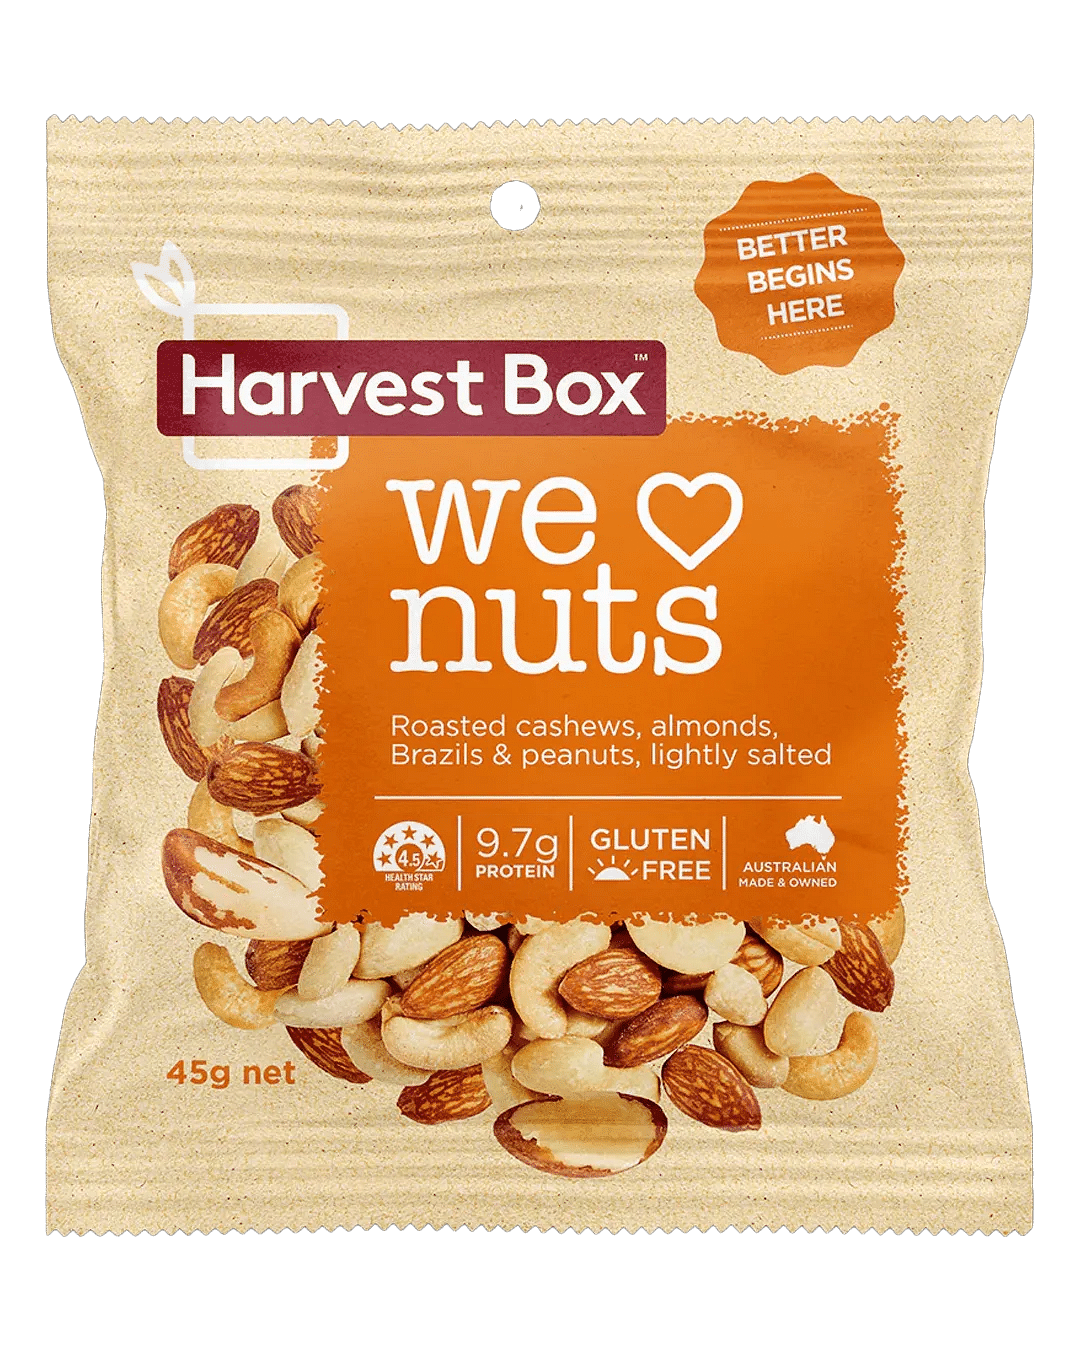 Harvest Box We Luv Nuts